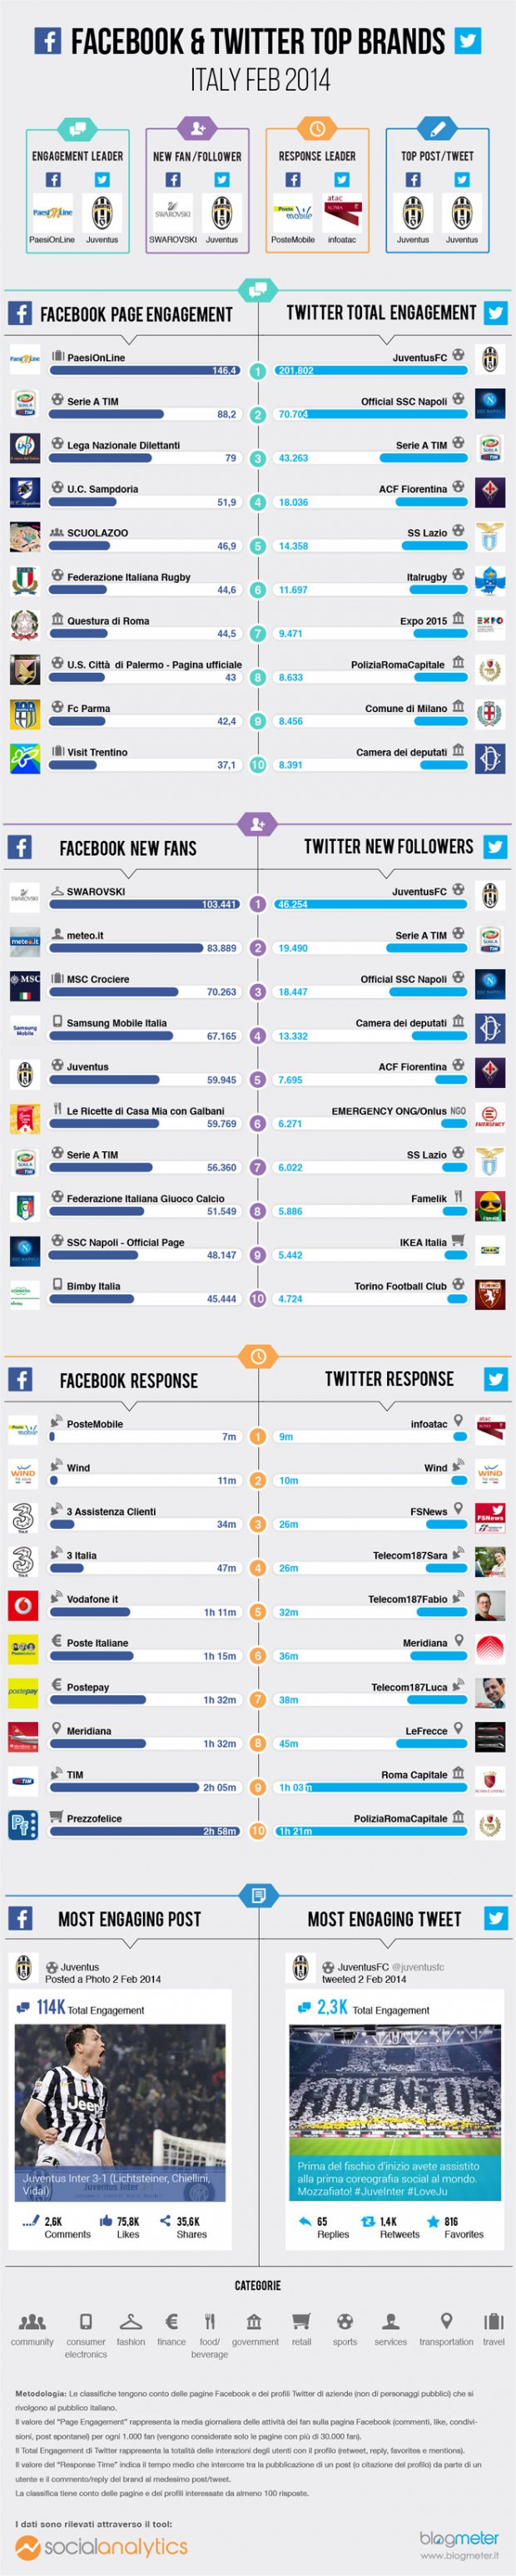 juventus facebook-top-brand-febbraio-2014-blogmeter-infografica